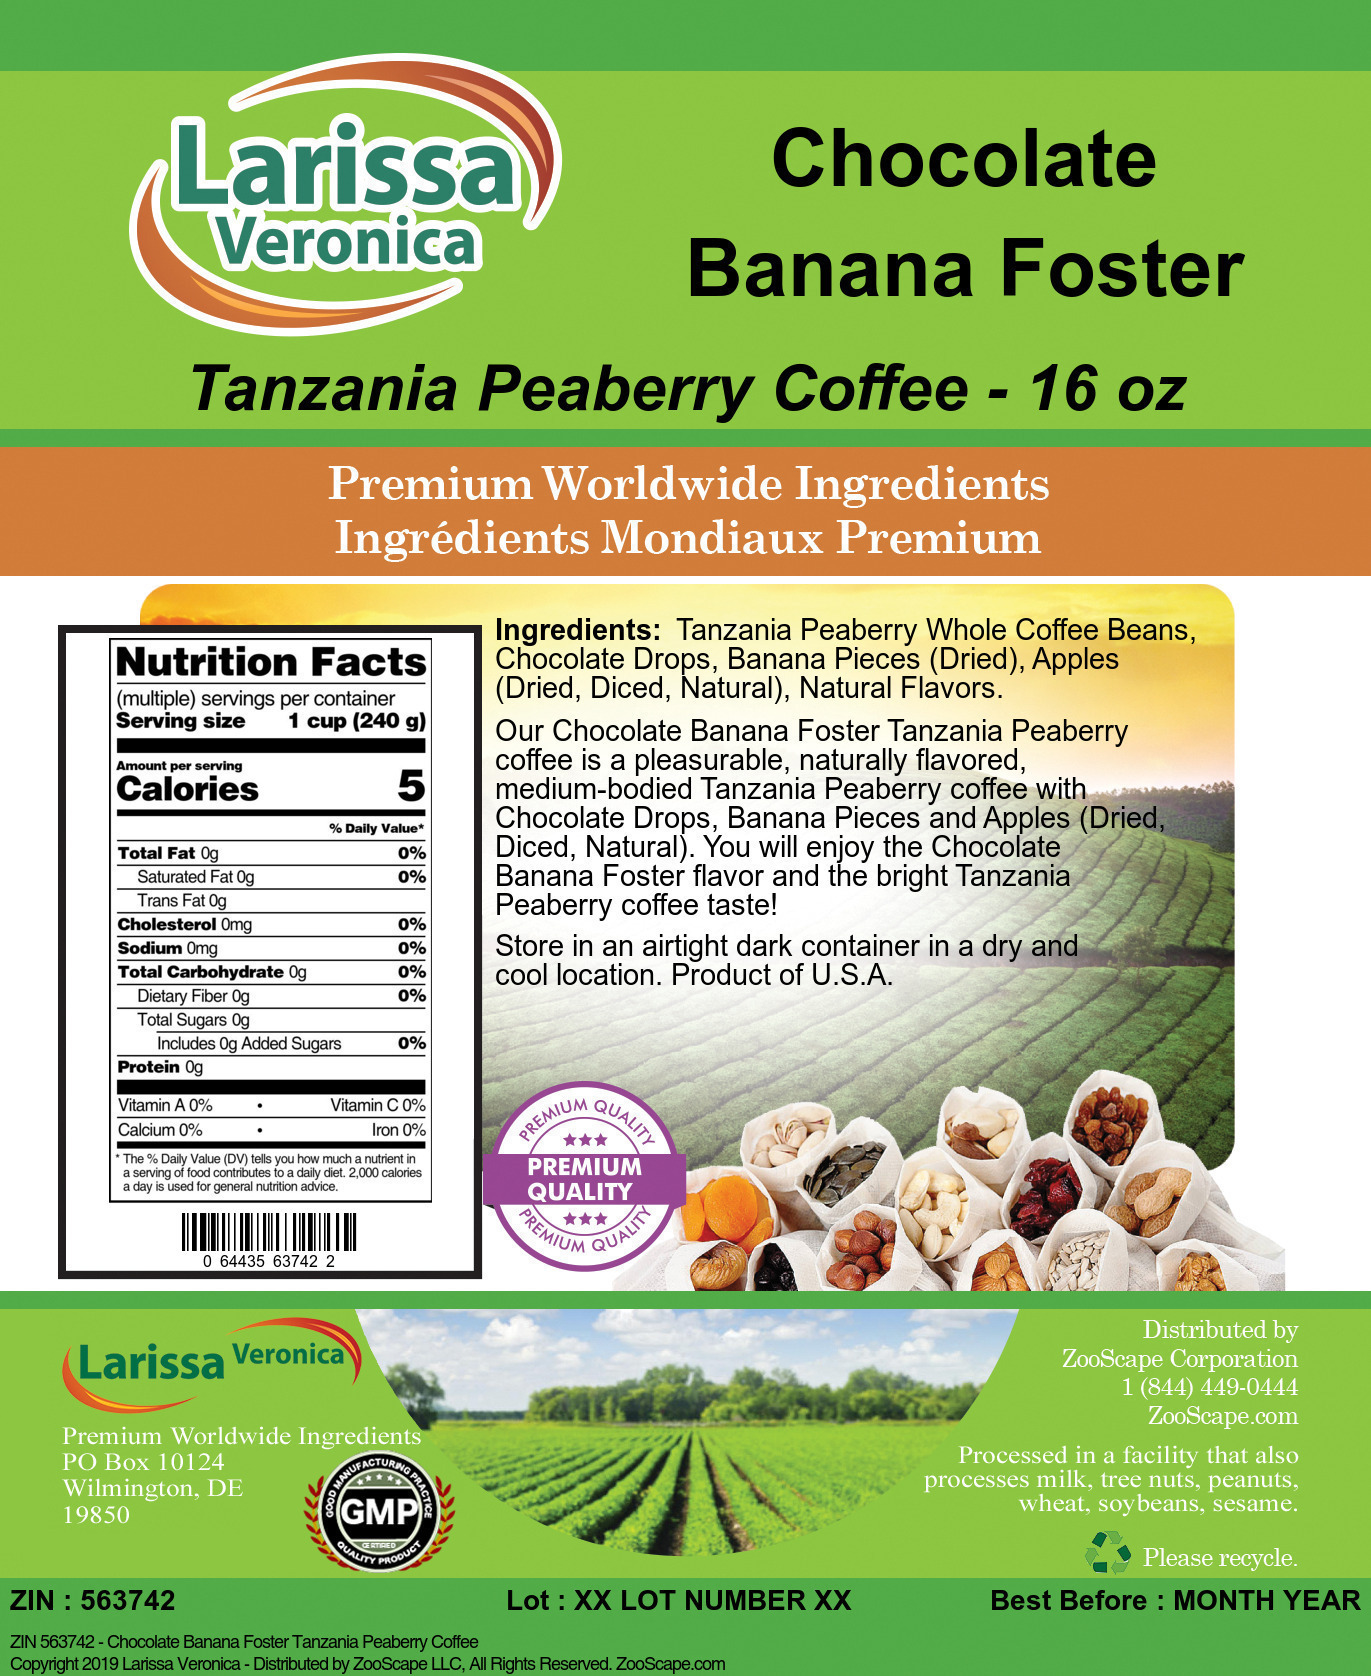 Chocolate Banana Foster Tanzania Peaberry Coffee - Label